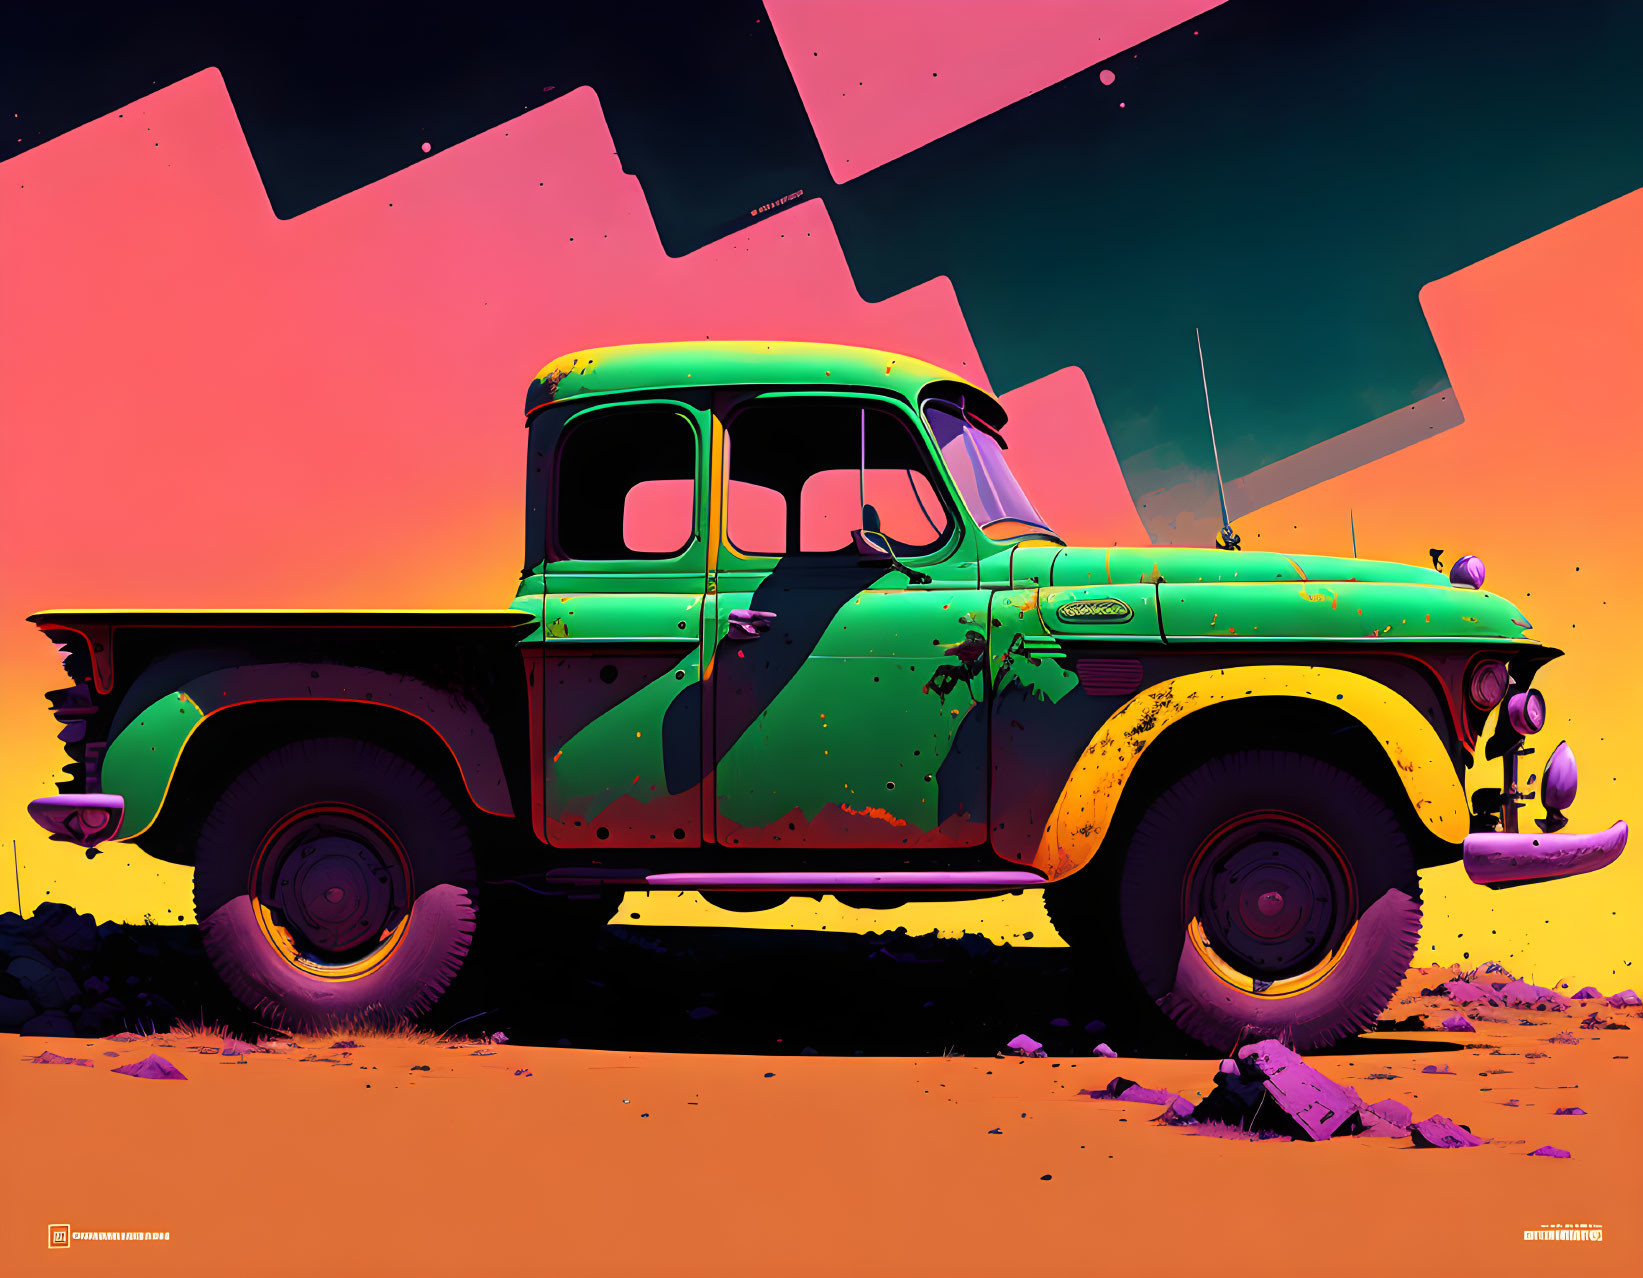 Old Pickup Truck in the Futuristic Desert